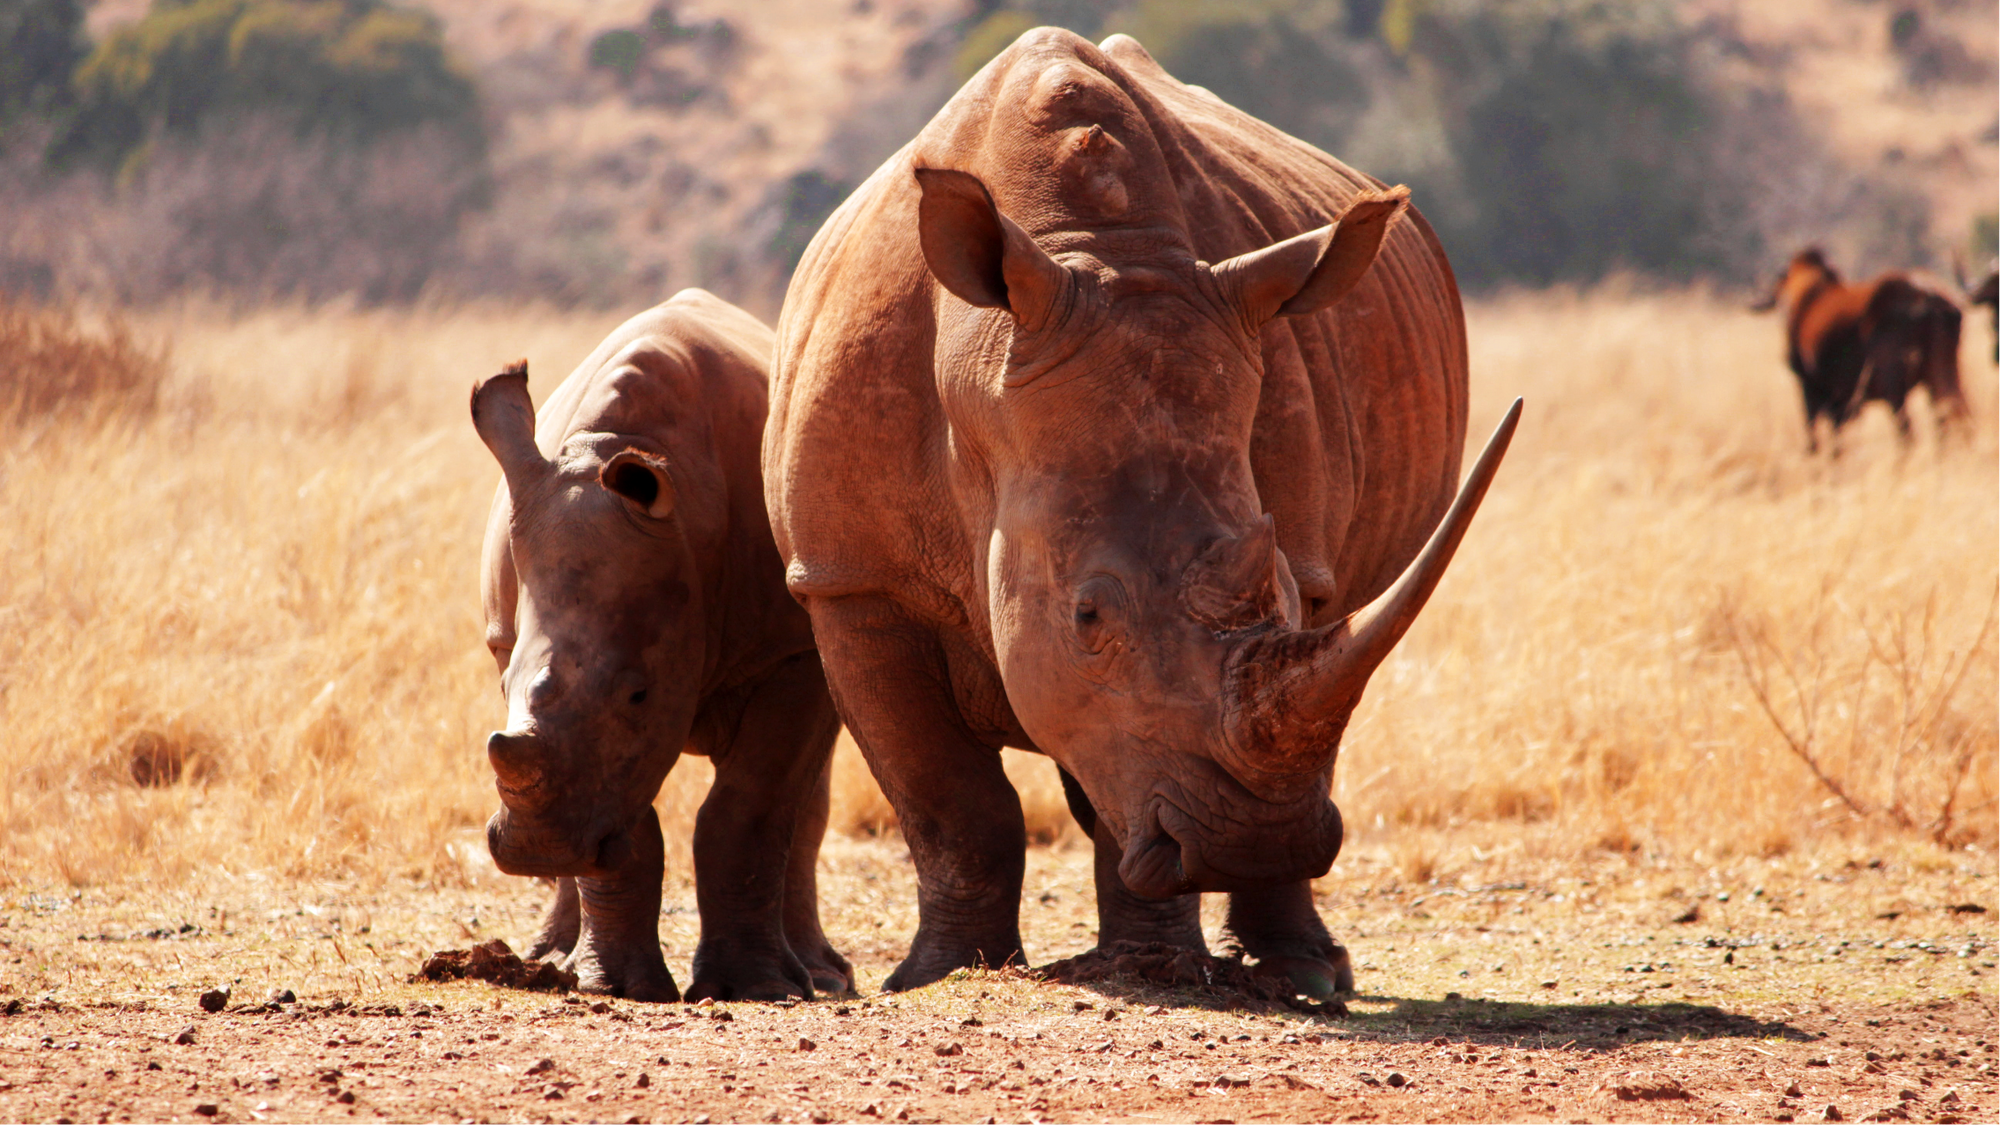 Waterberg Rhino UK Is Our Charity Partner